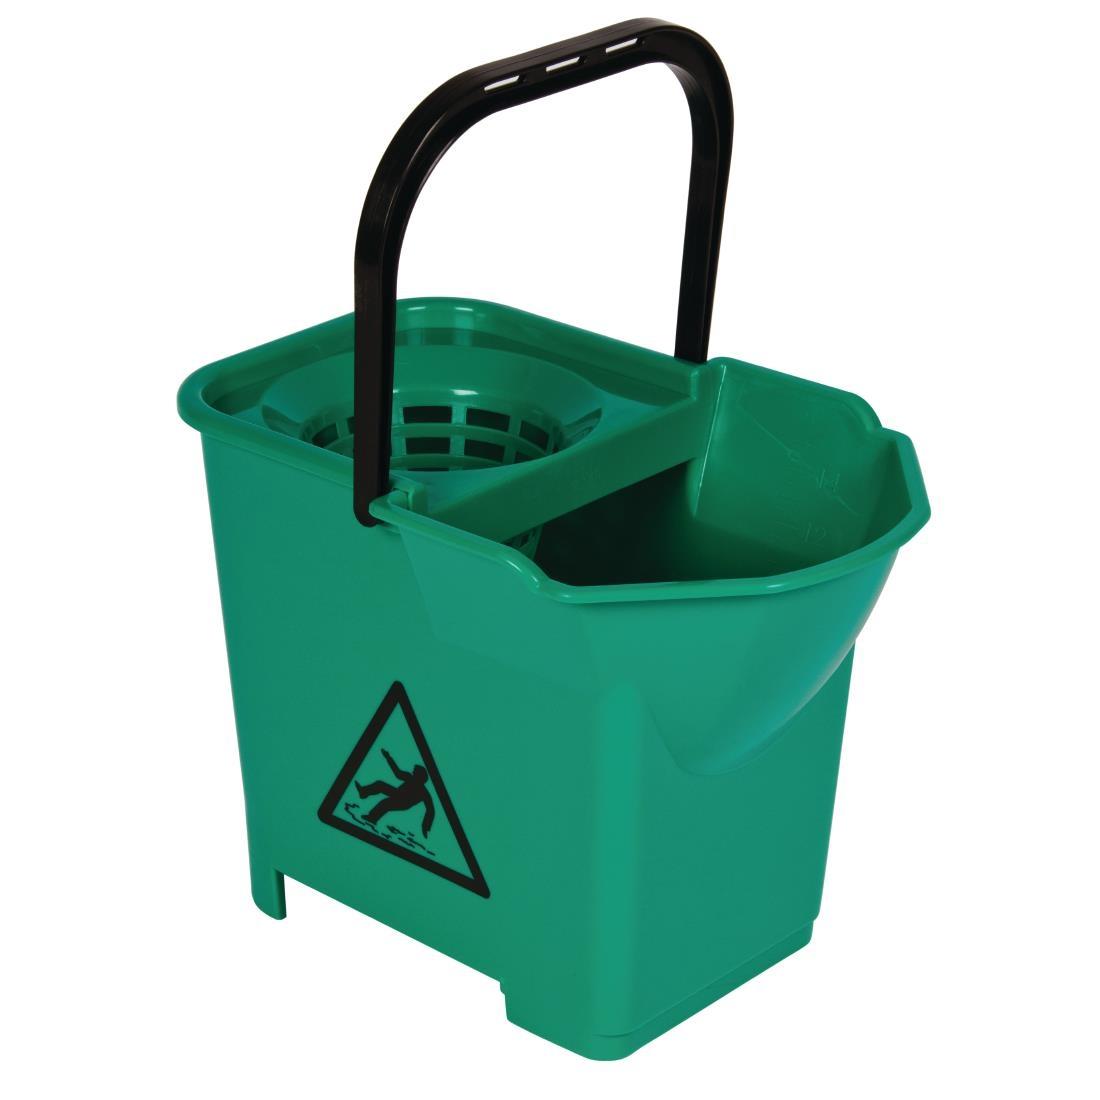 Jantex Colour Coded Mop Bucket Green - S224  - 1